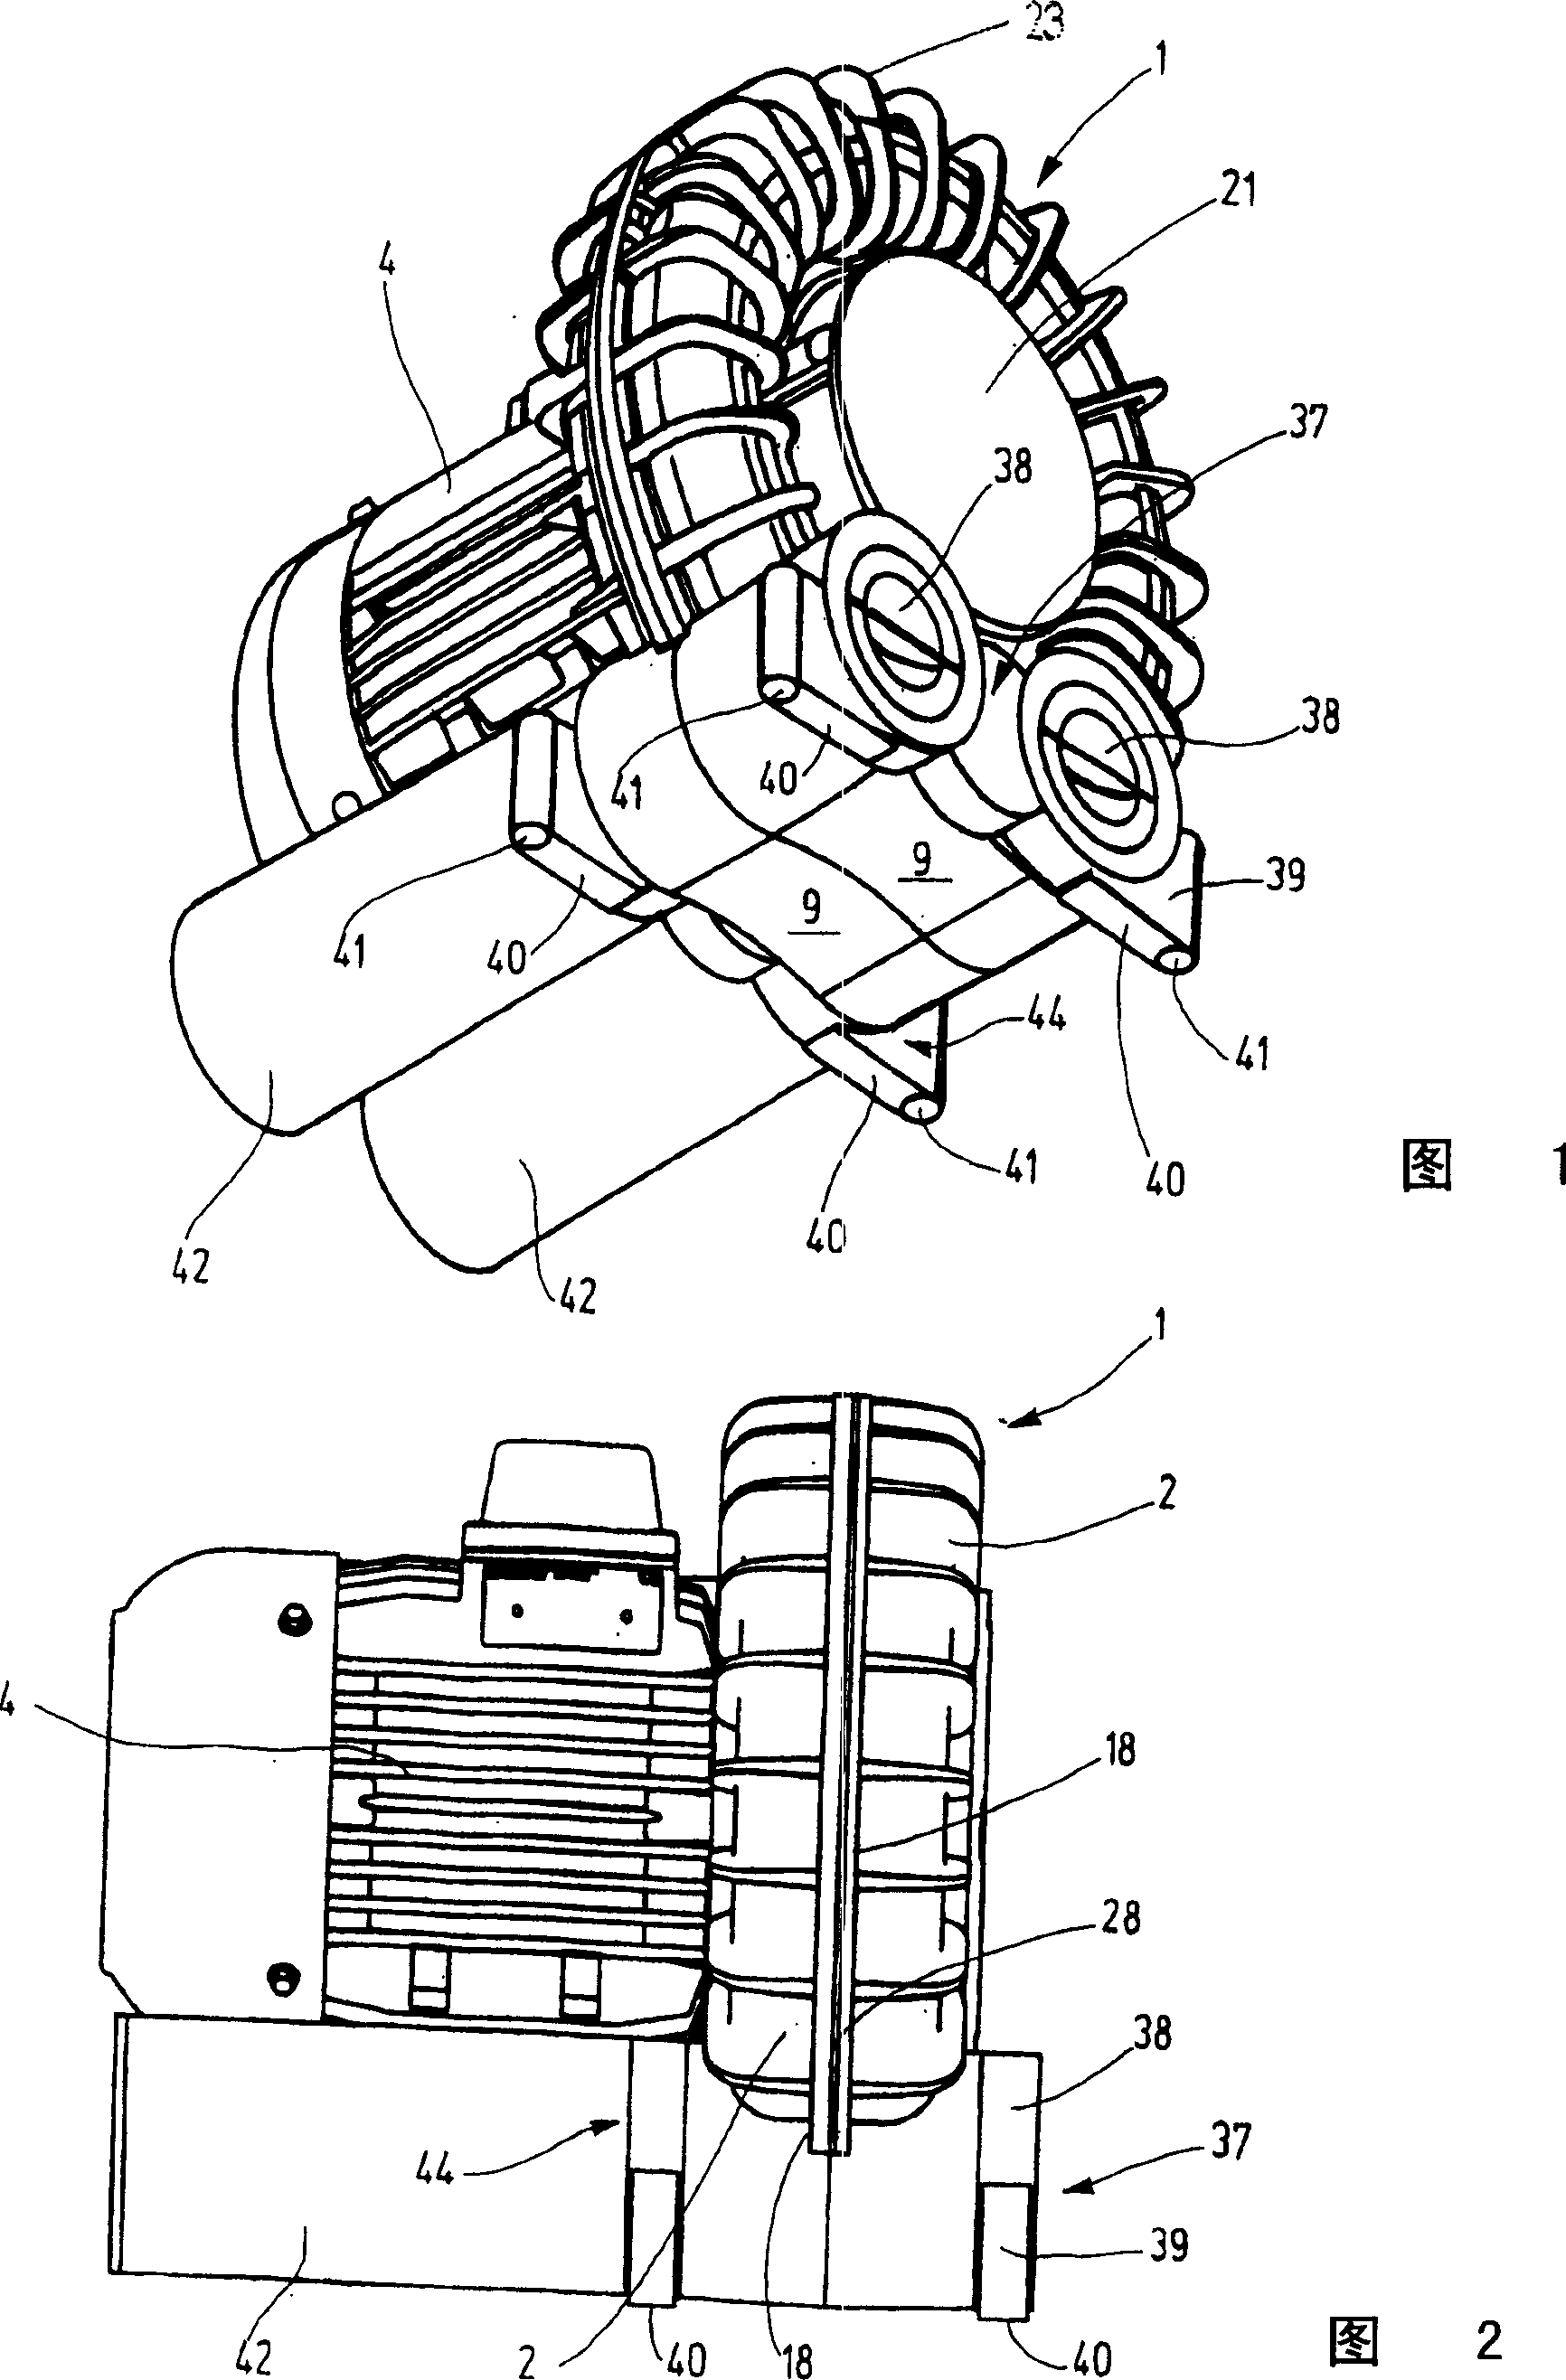 Side channel compressor